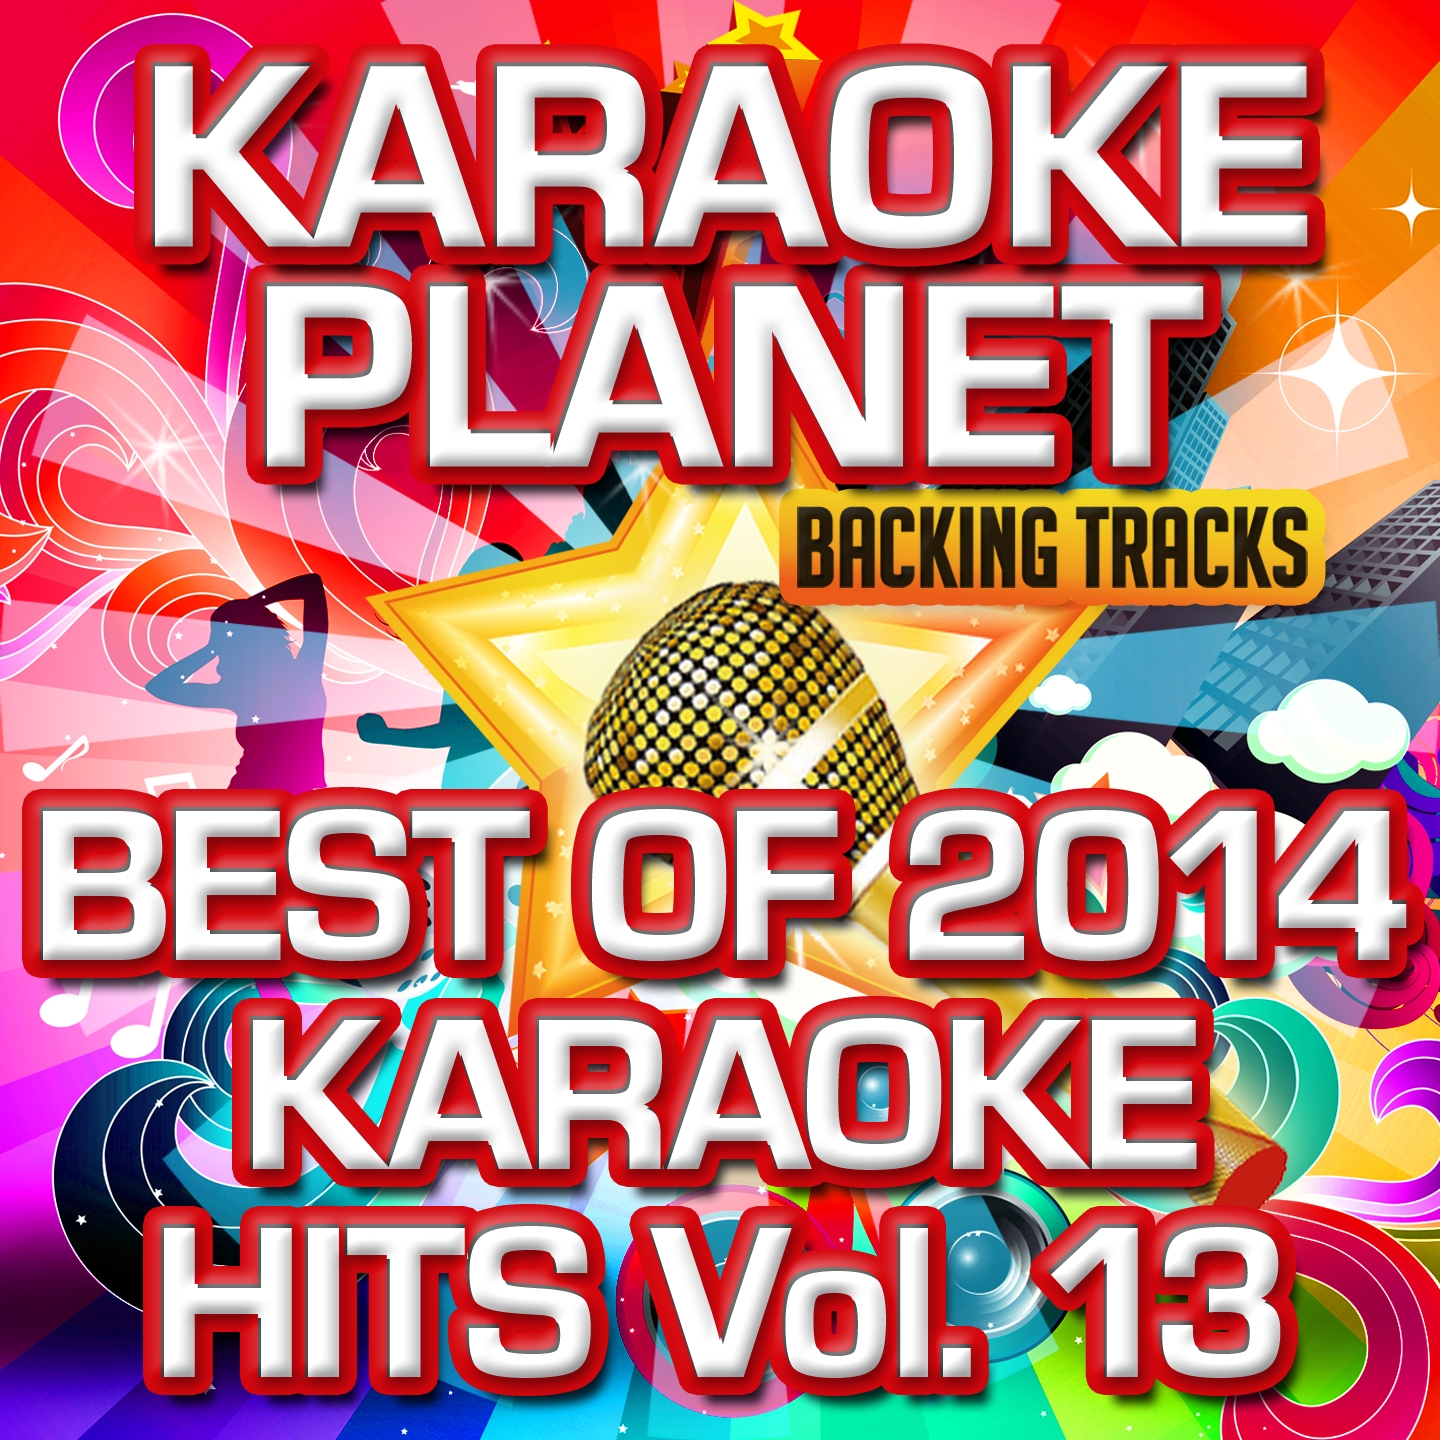 Best of 2014 Karaoke Hits, Vol. 13